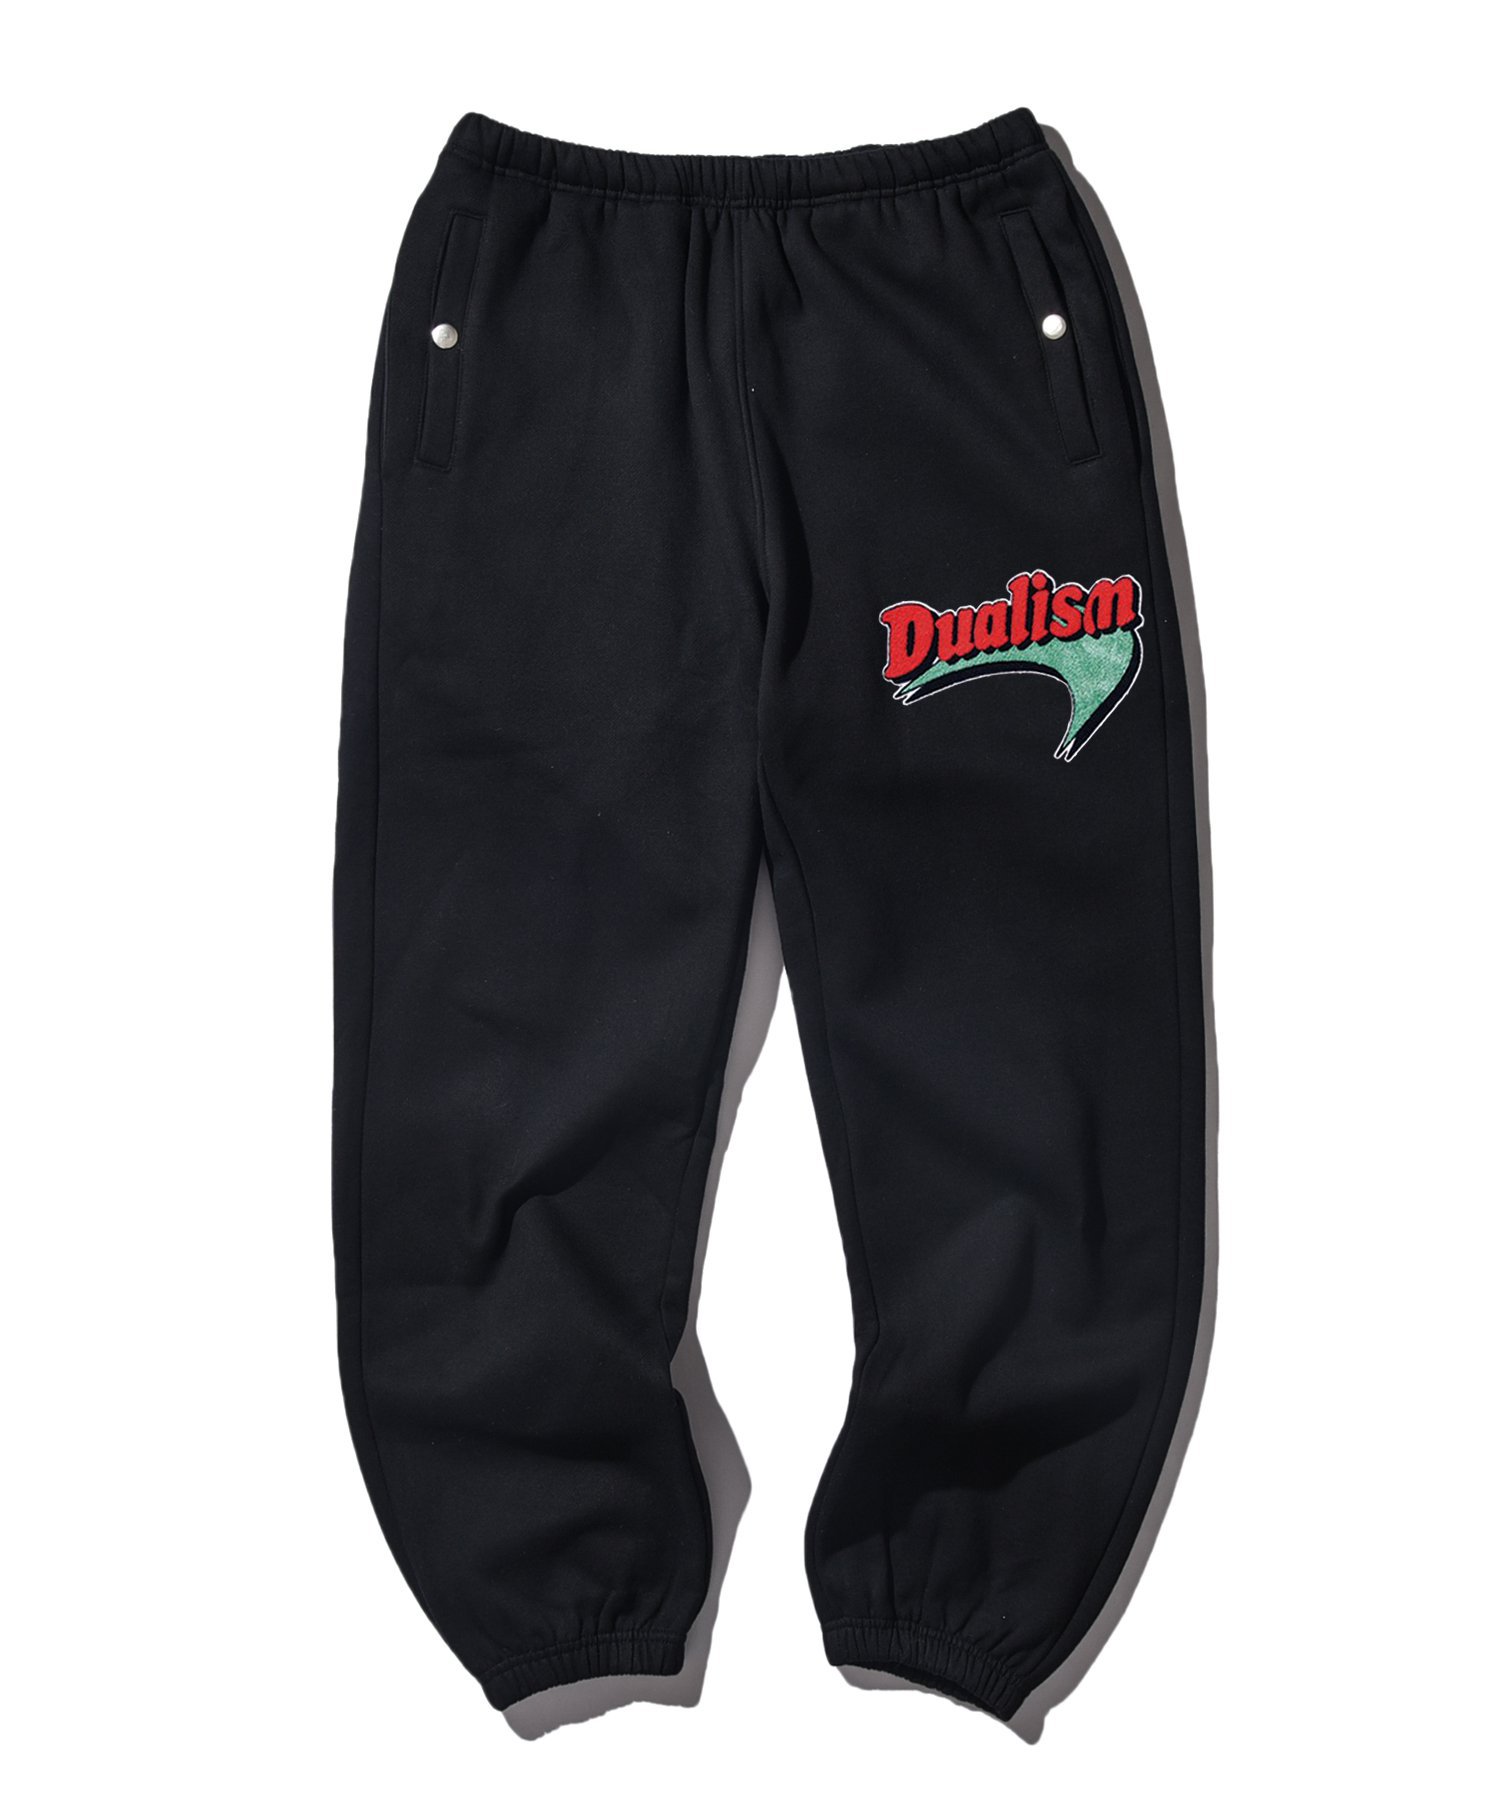 DUALISM boomerang logo sweat pants ブラック